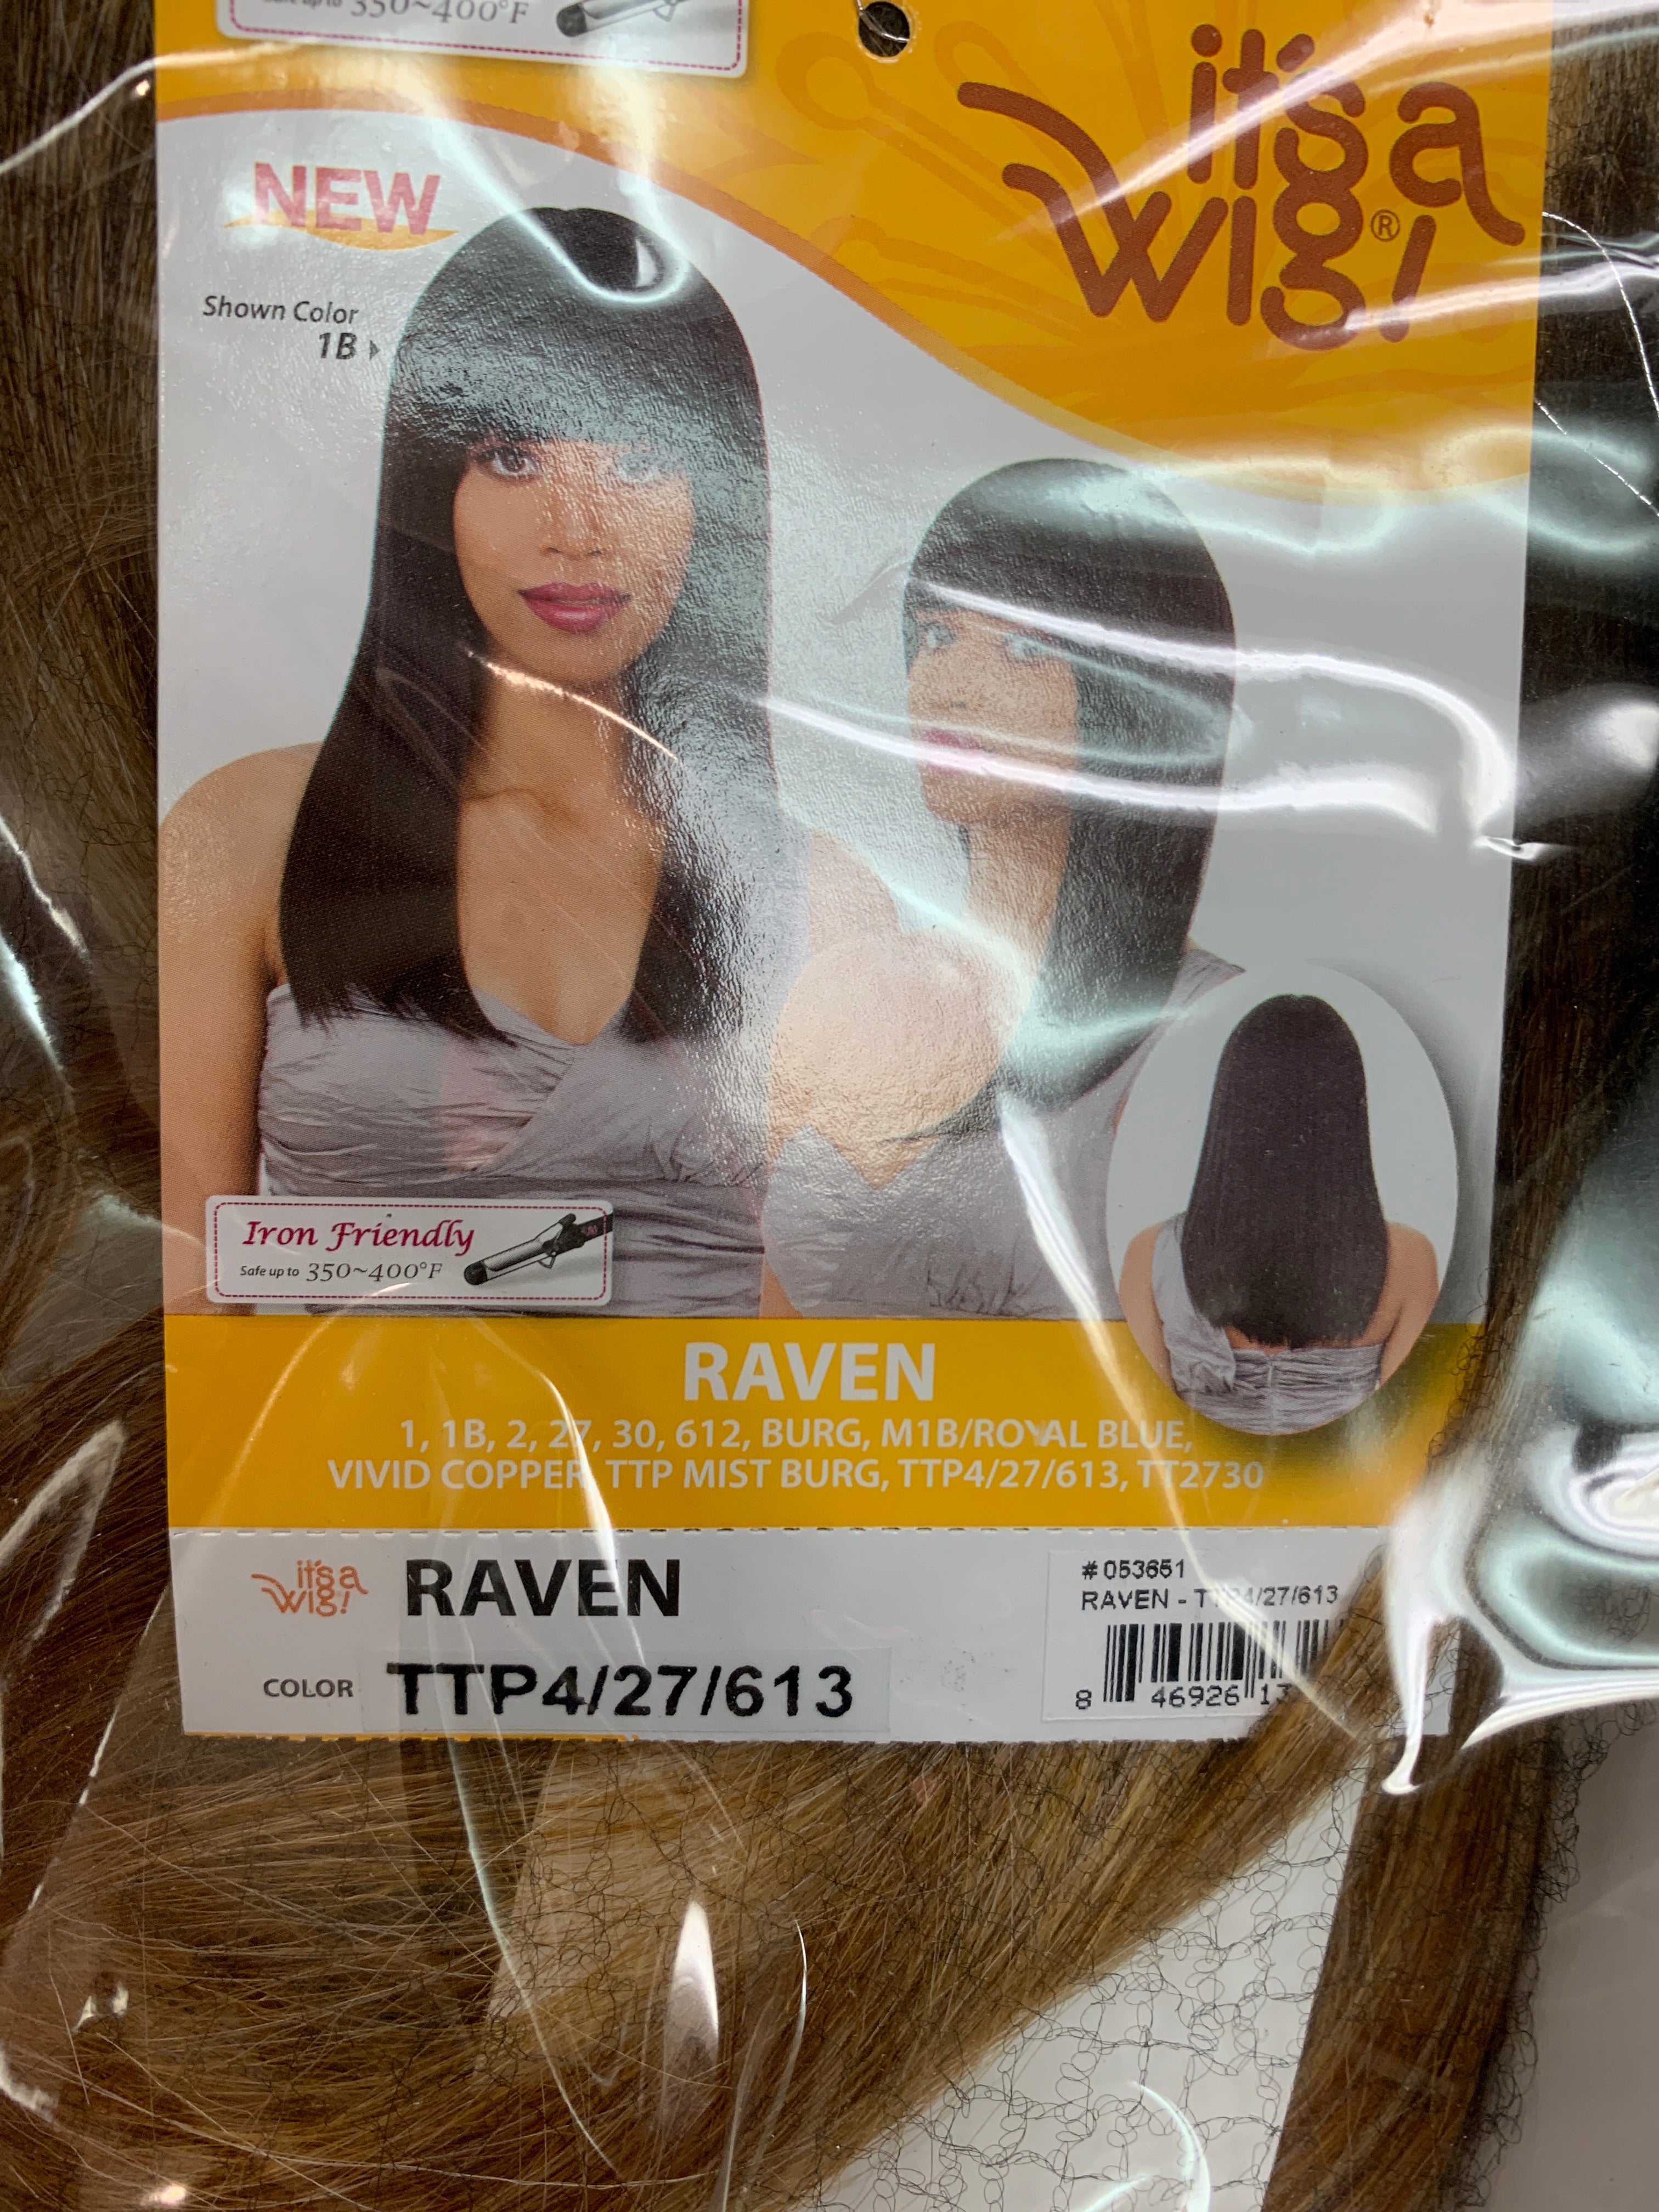 It’s a wig Raven